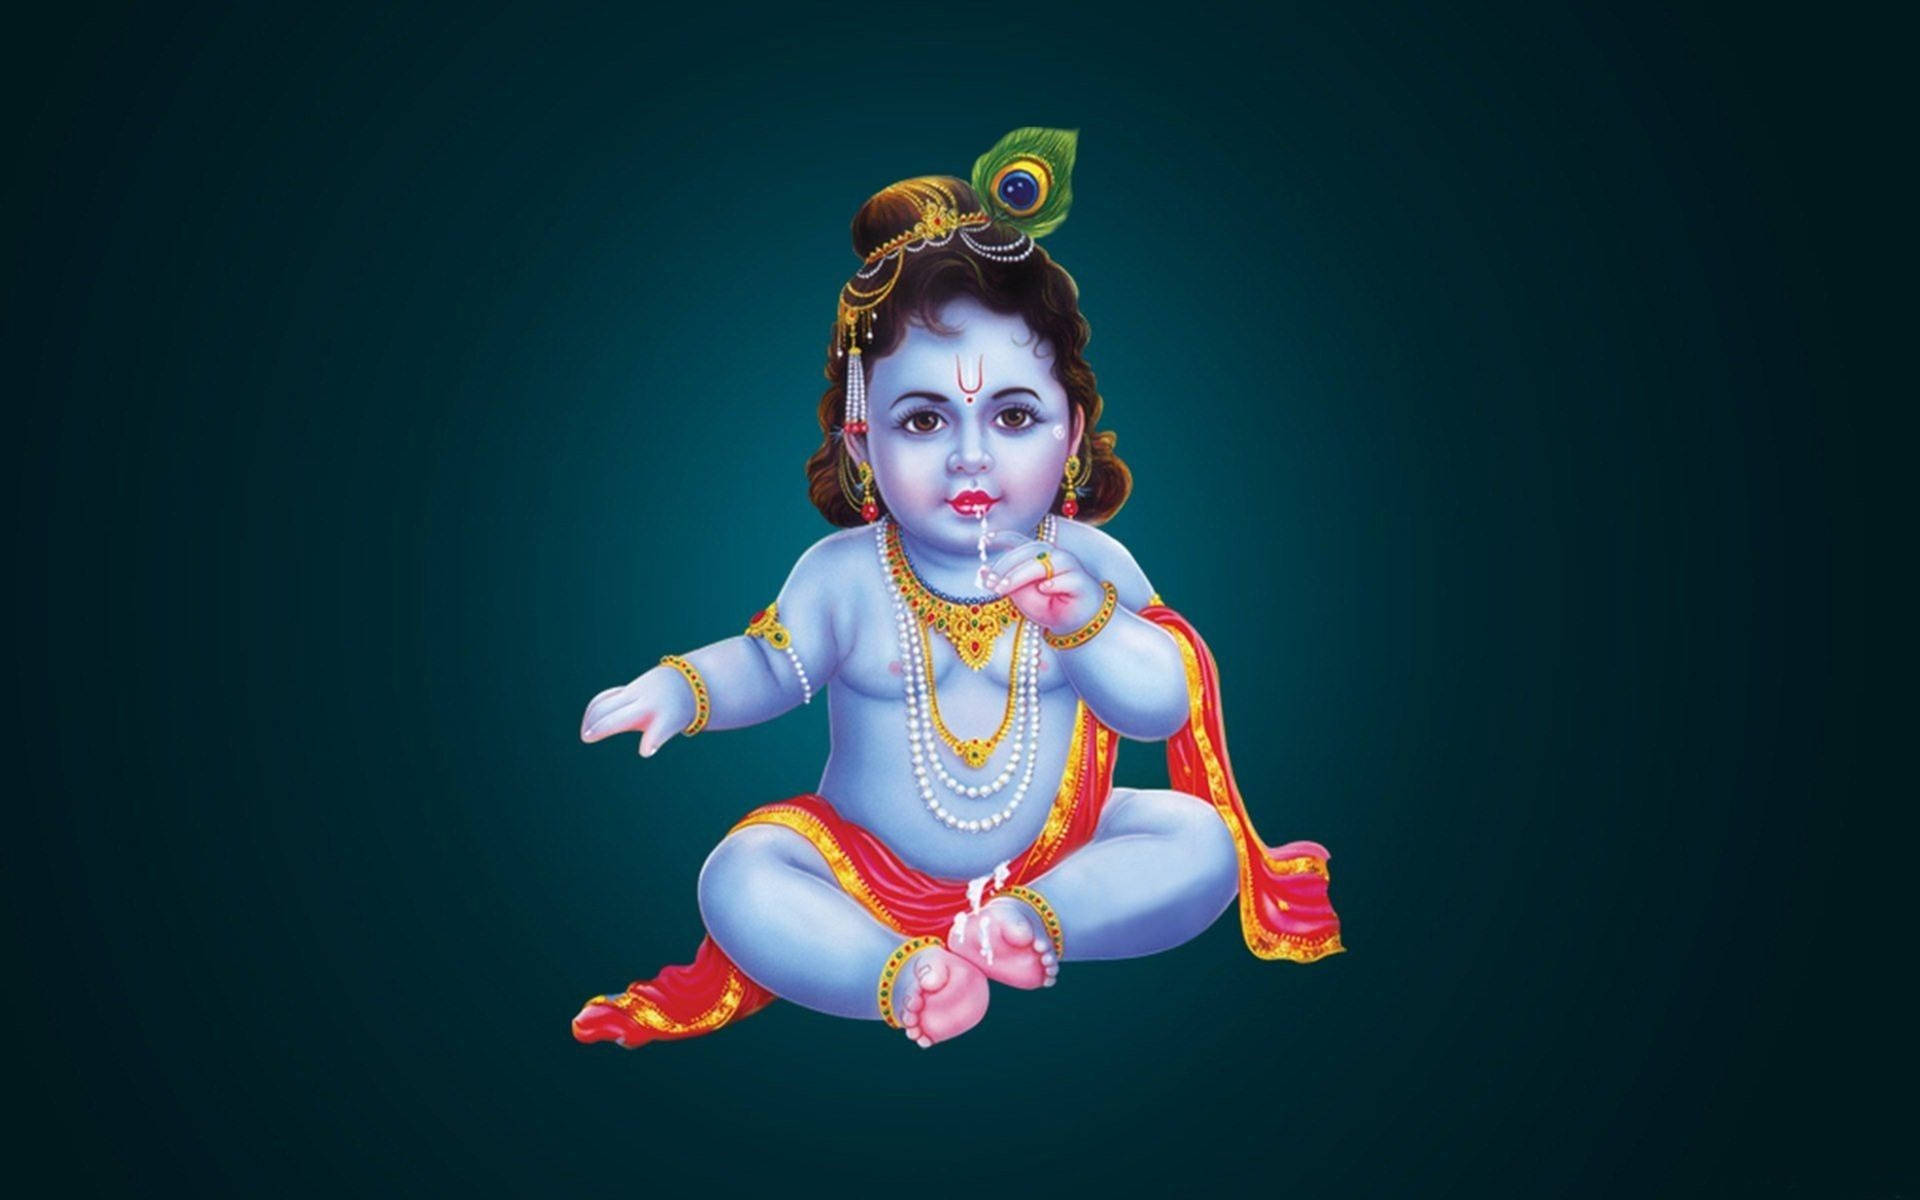 Baby Lord Krishna 4K Digital Artwork Wallpaper